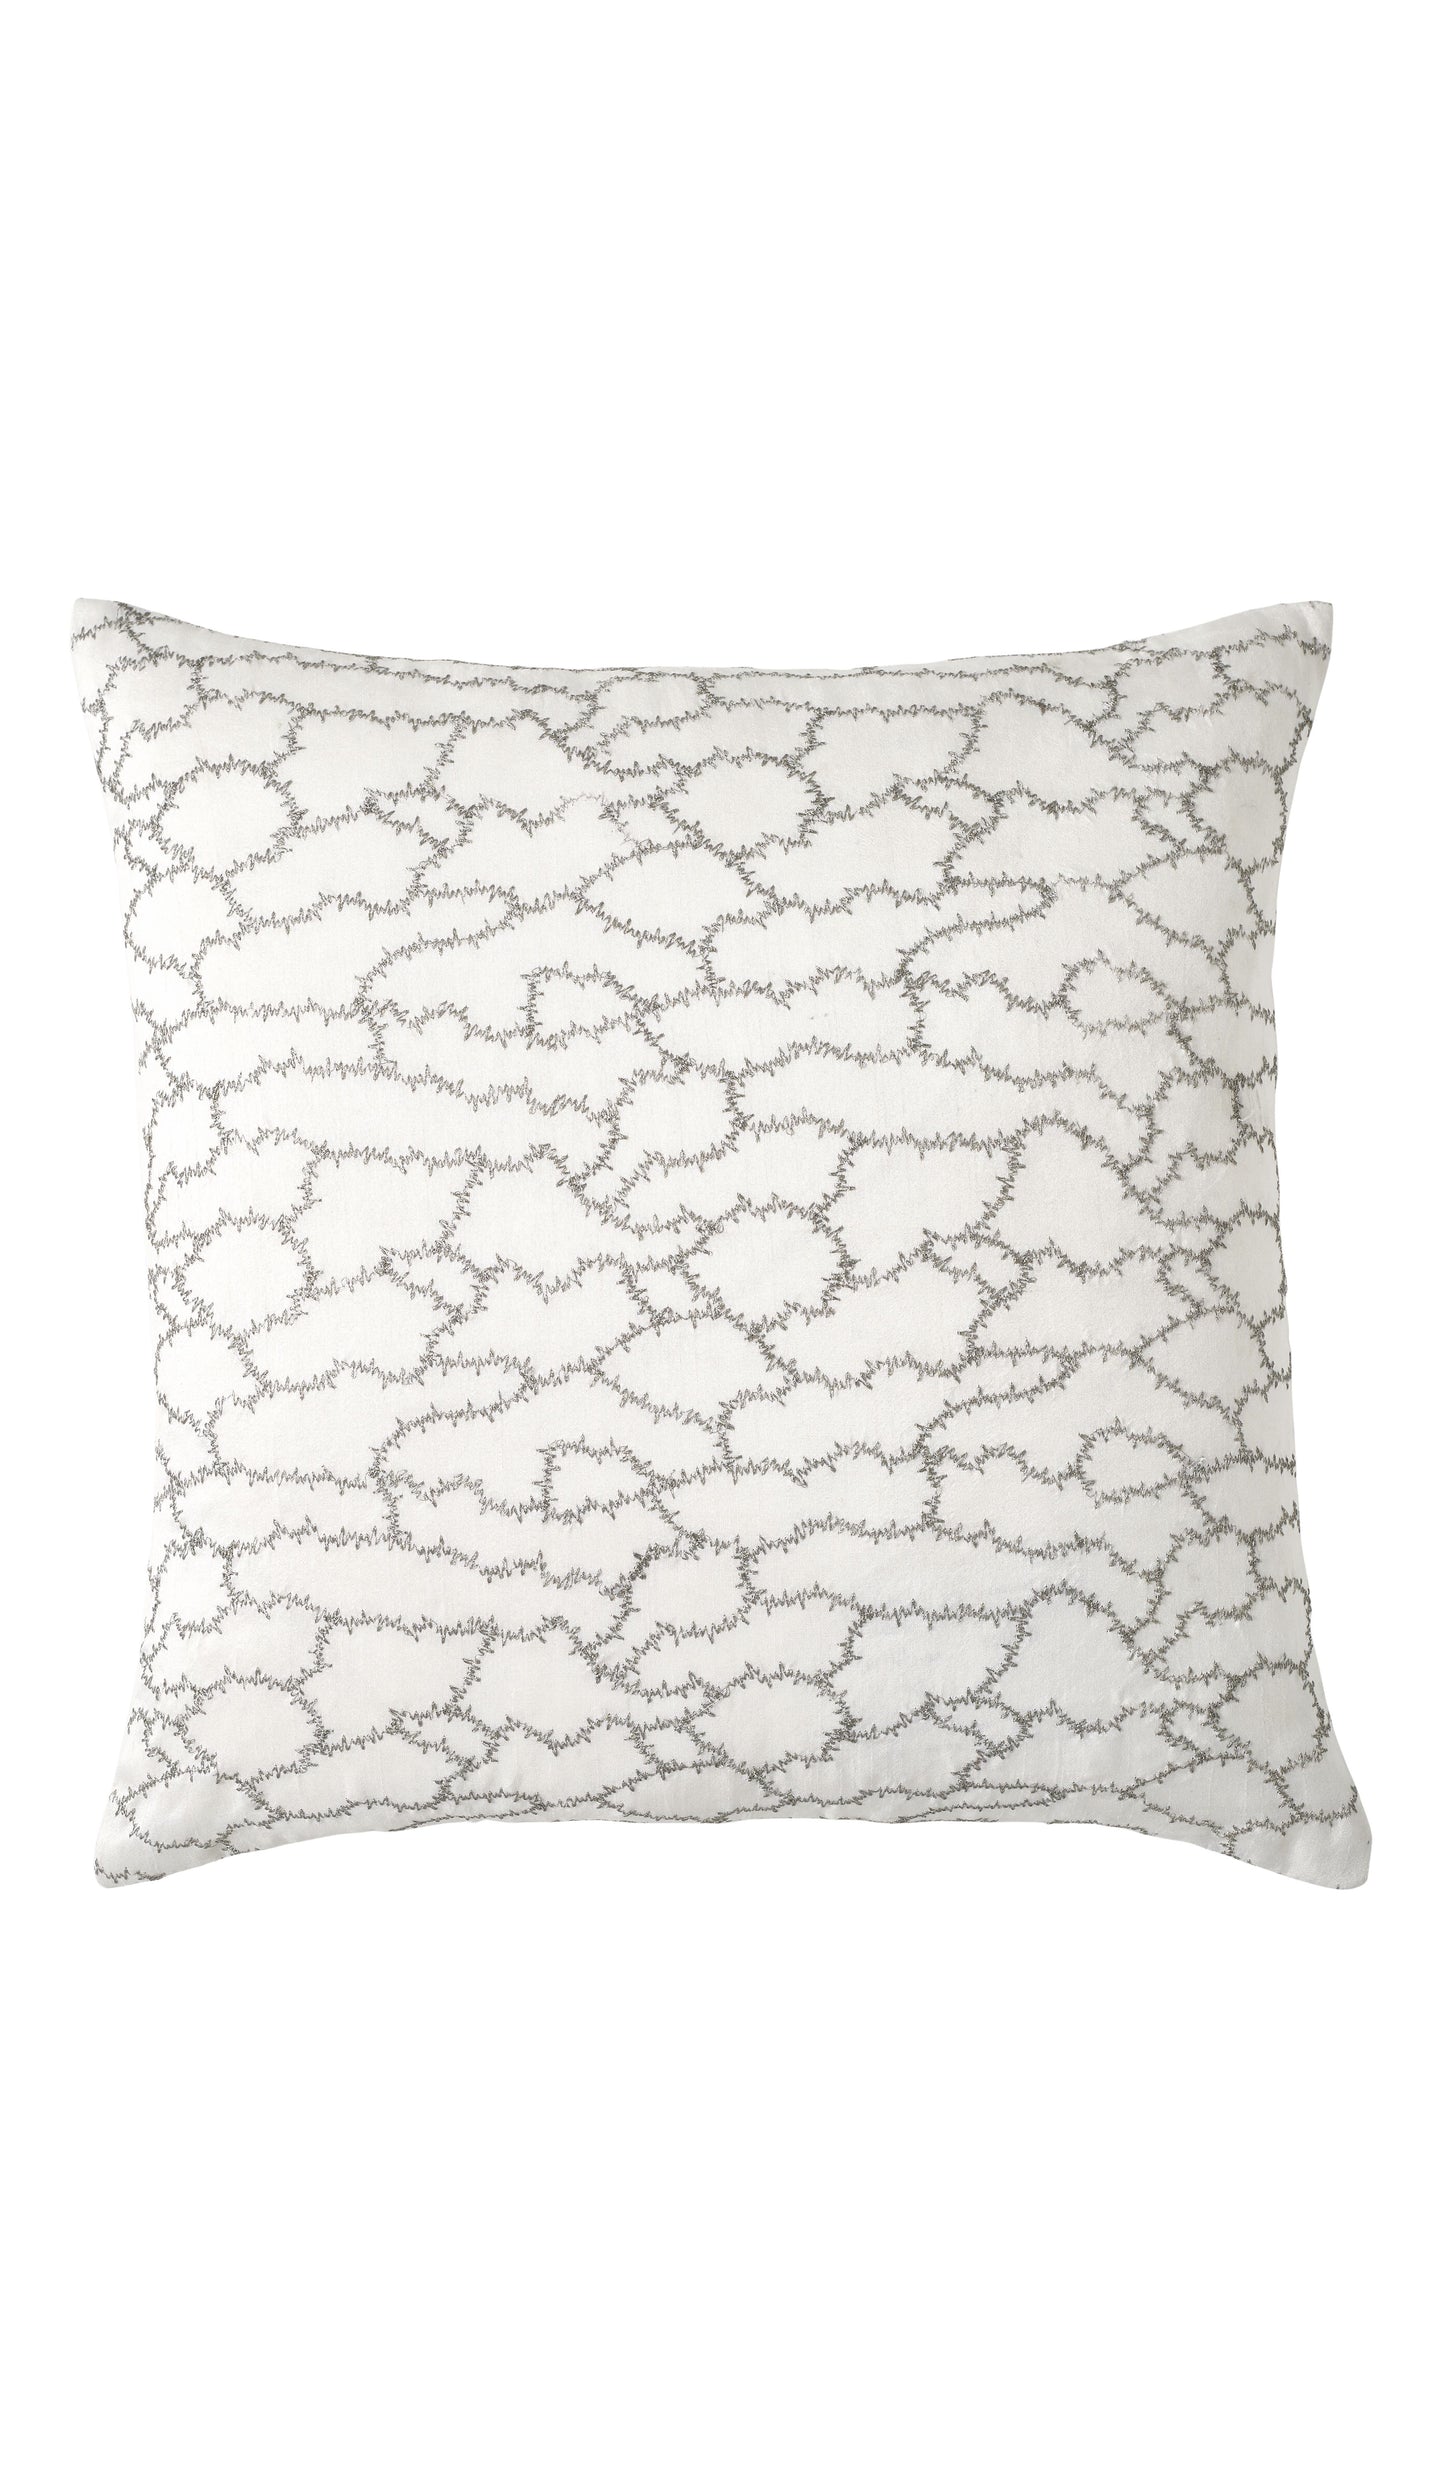 Michael Aram All Over Texture Decorative Pillow